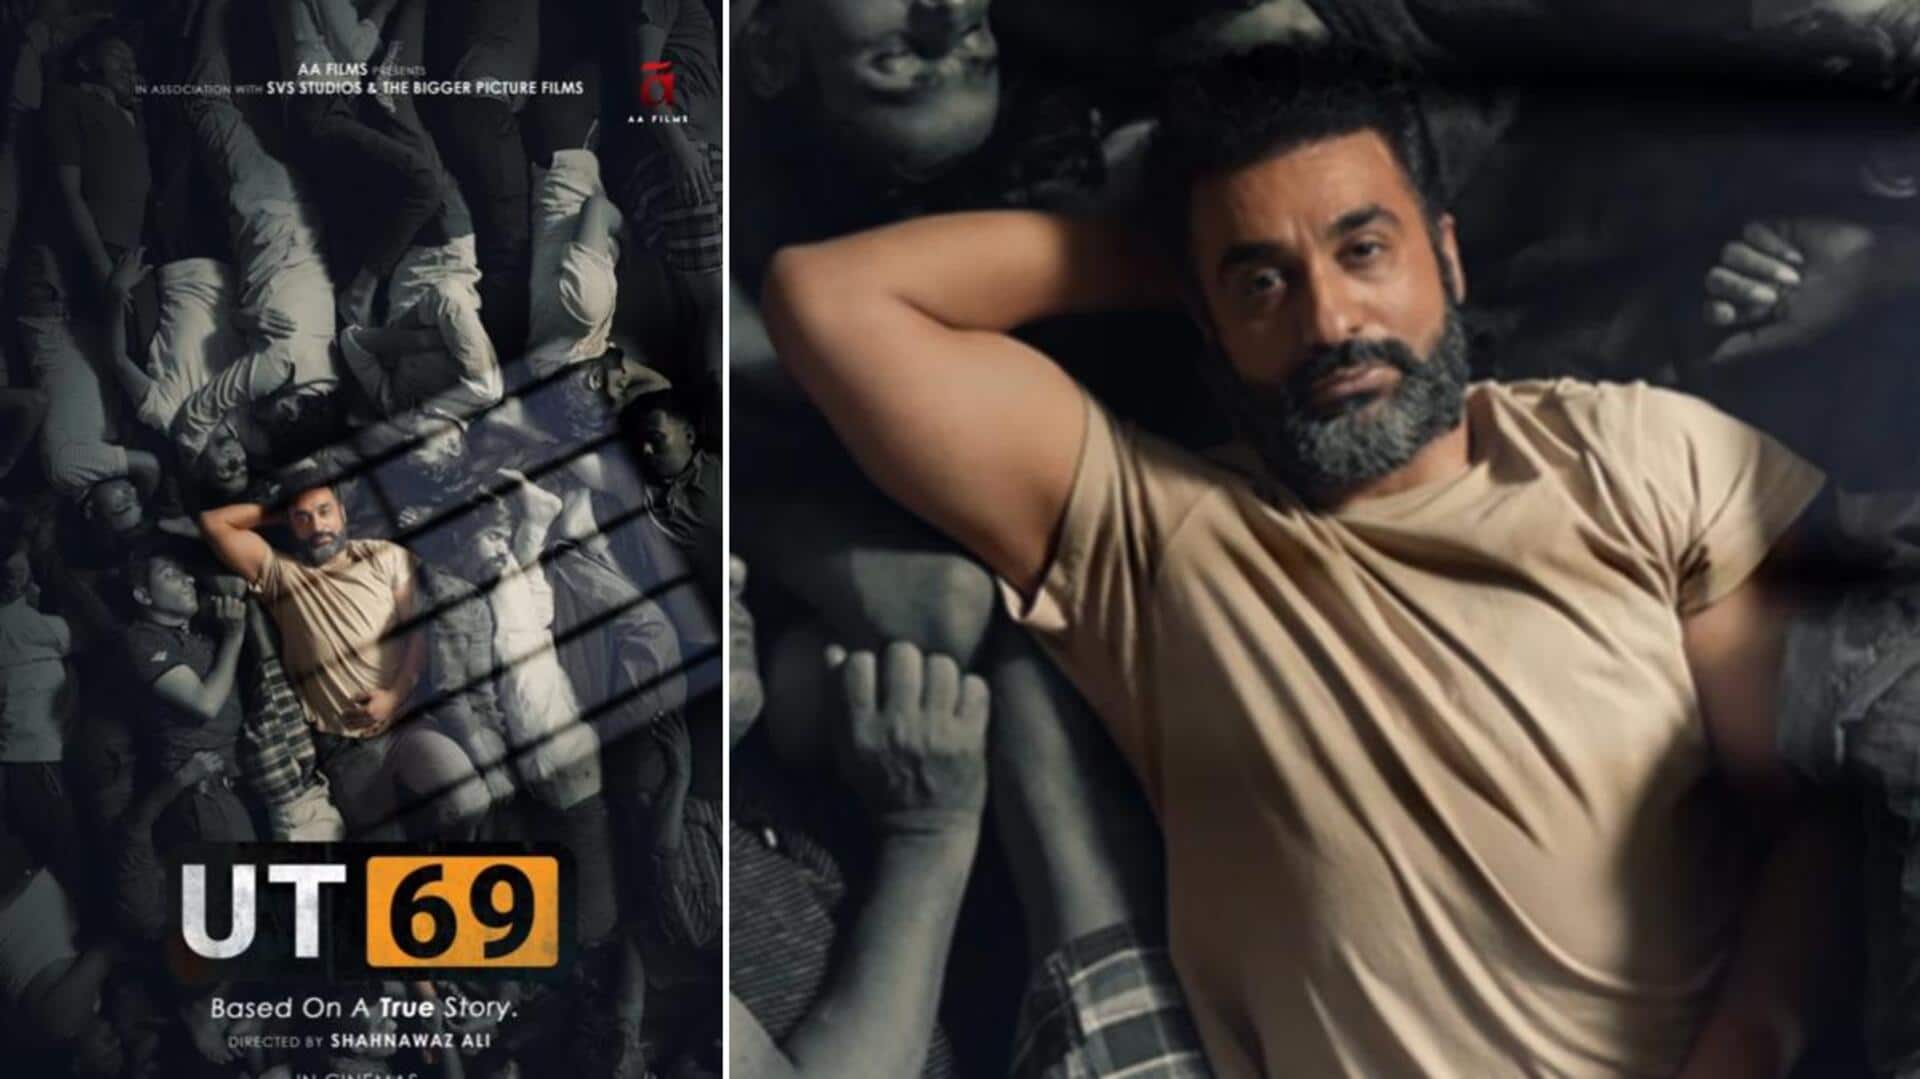 Box office: Raj Kundra's 'UT 69' faces uphill battle